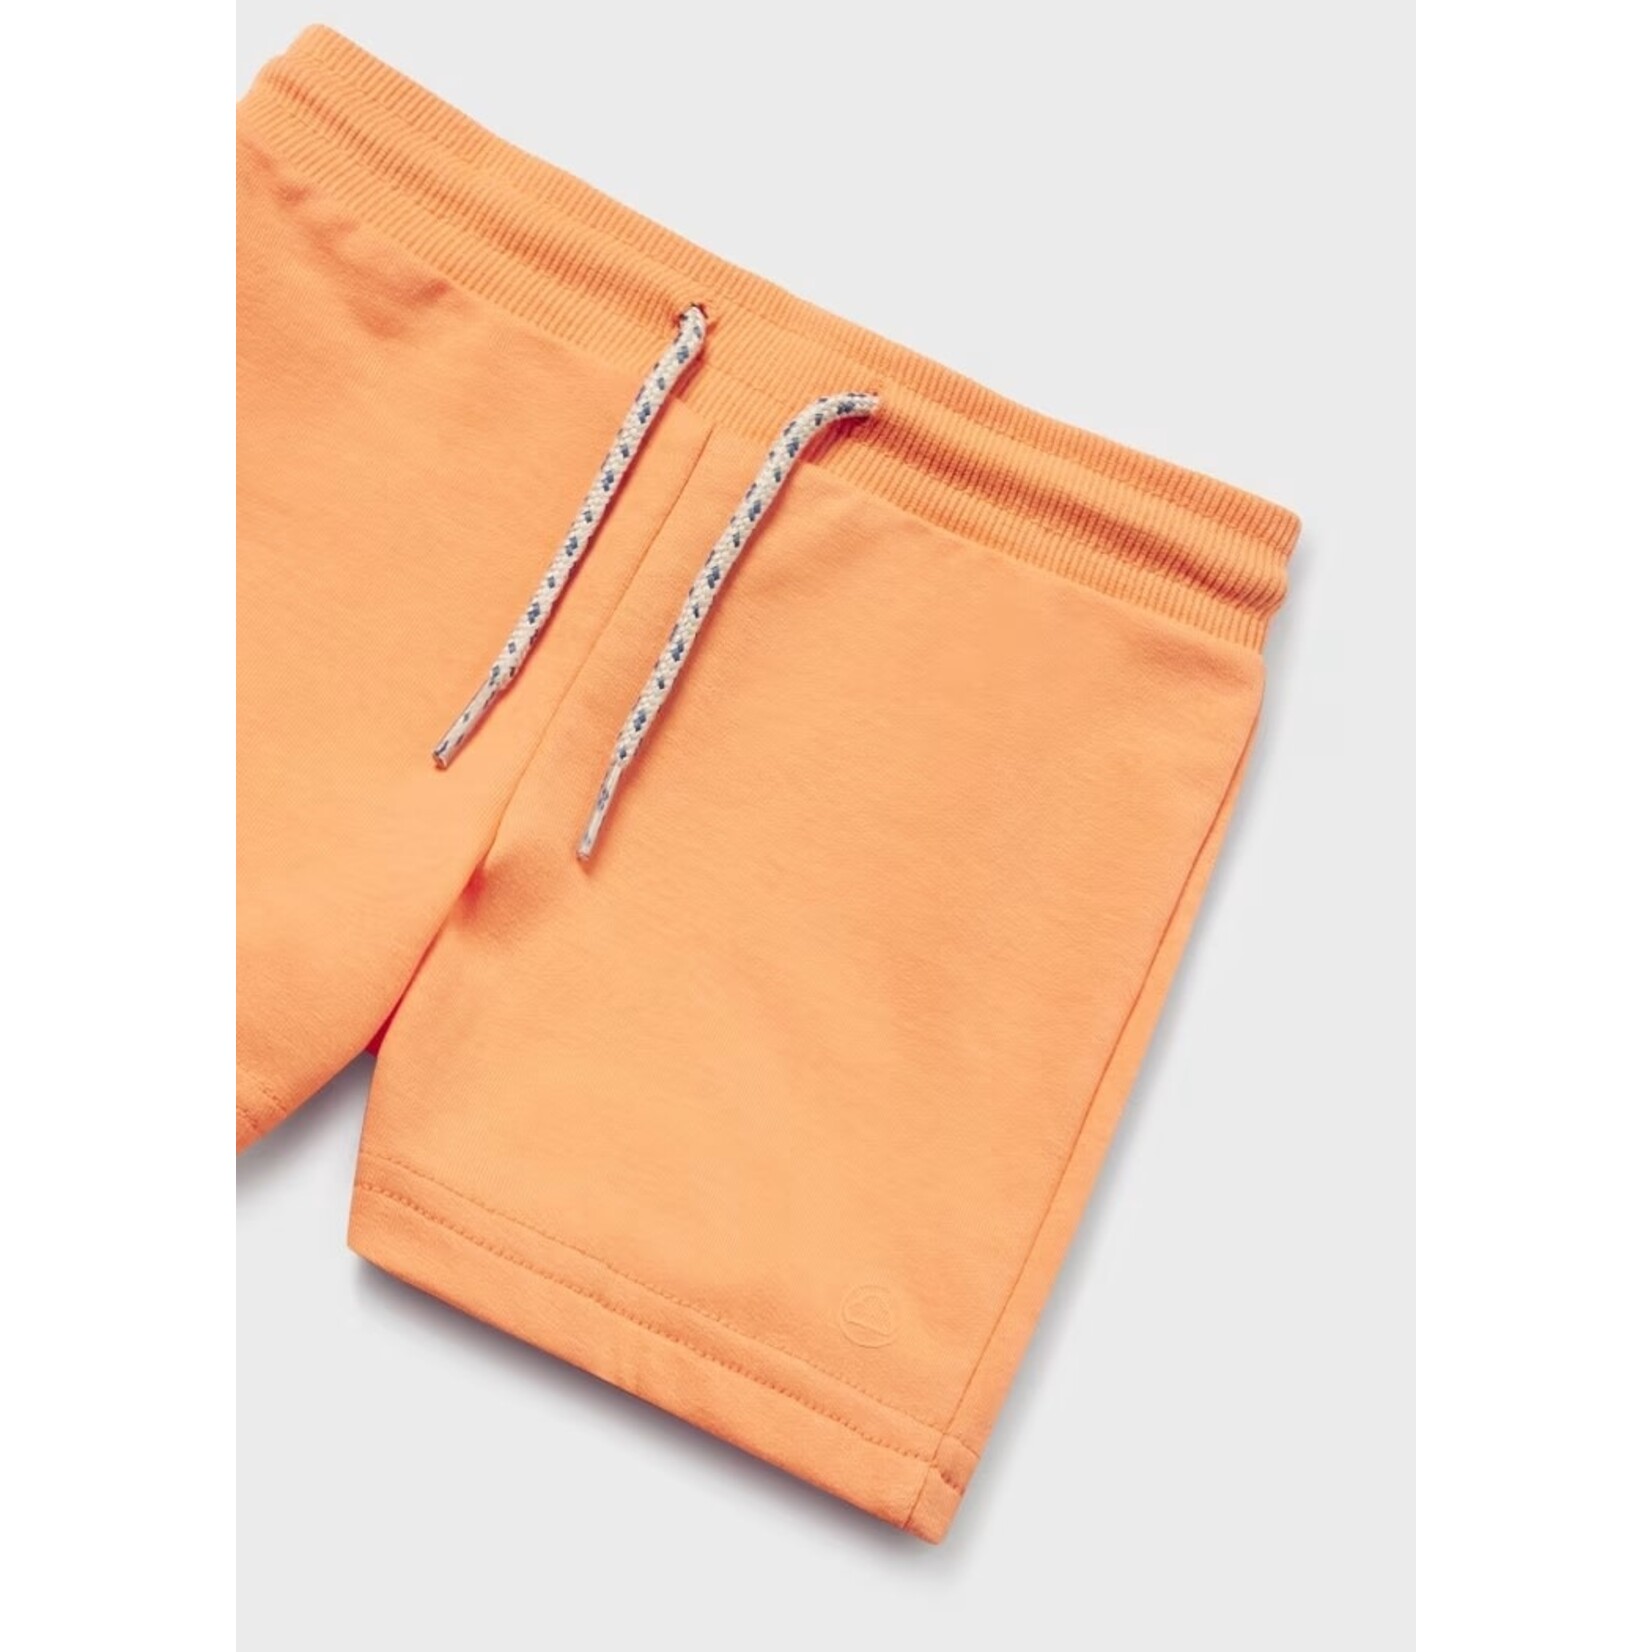 Mayoral MAYORAL - Cotton jersey shorts - tangerine orange